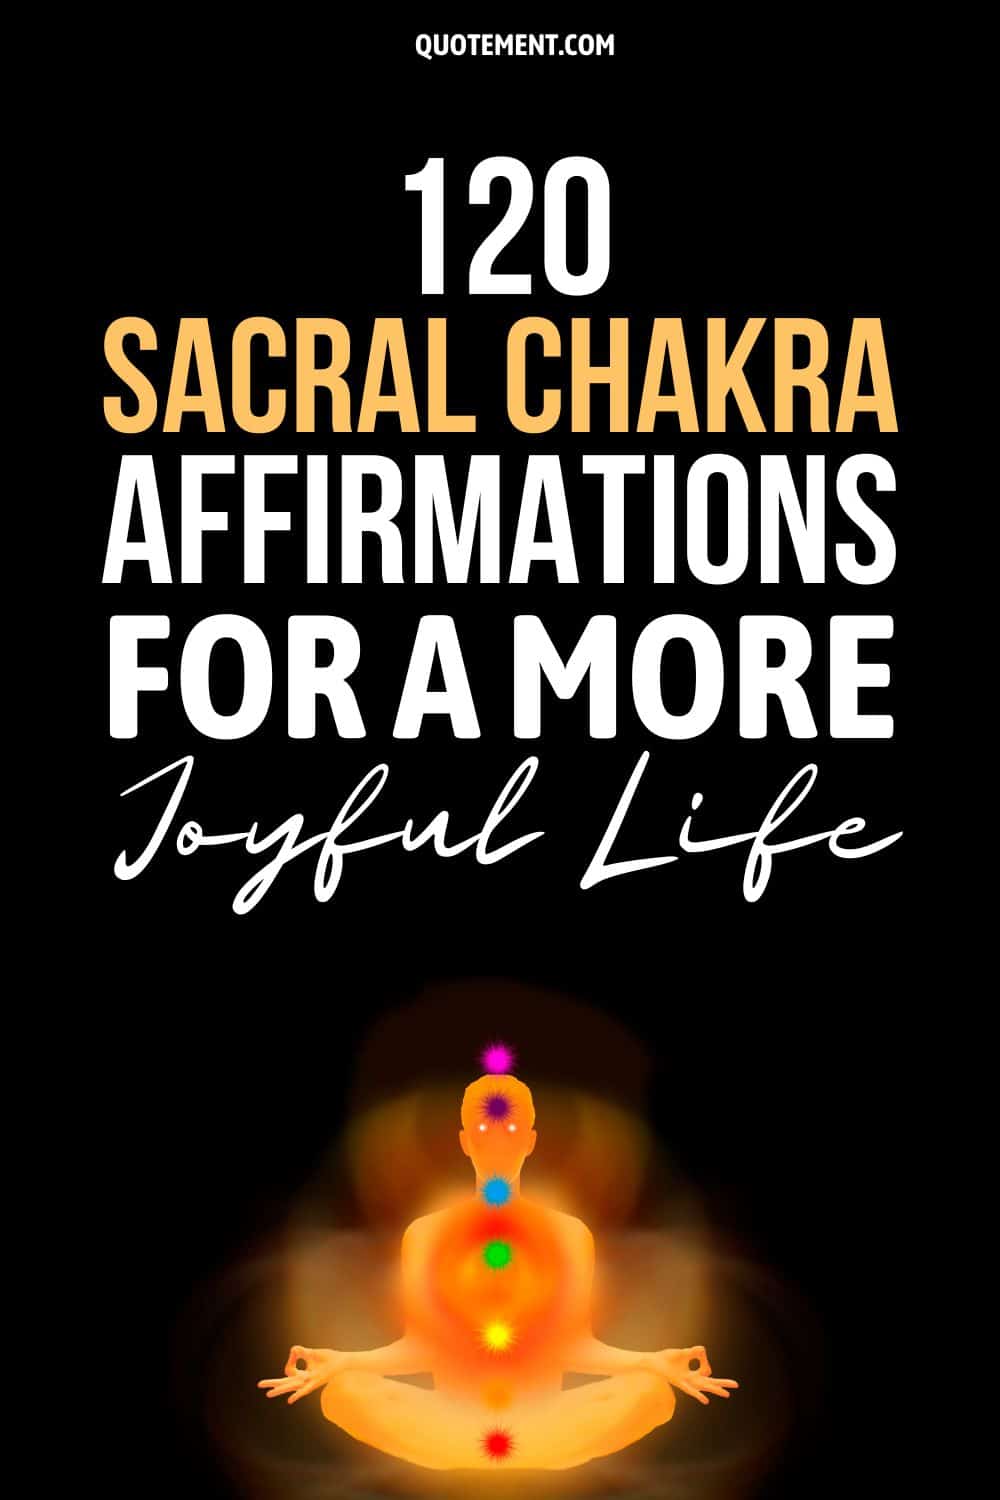 120 Sacral Chakra Affirmations For A More Joyful Life
